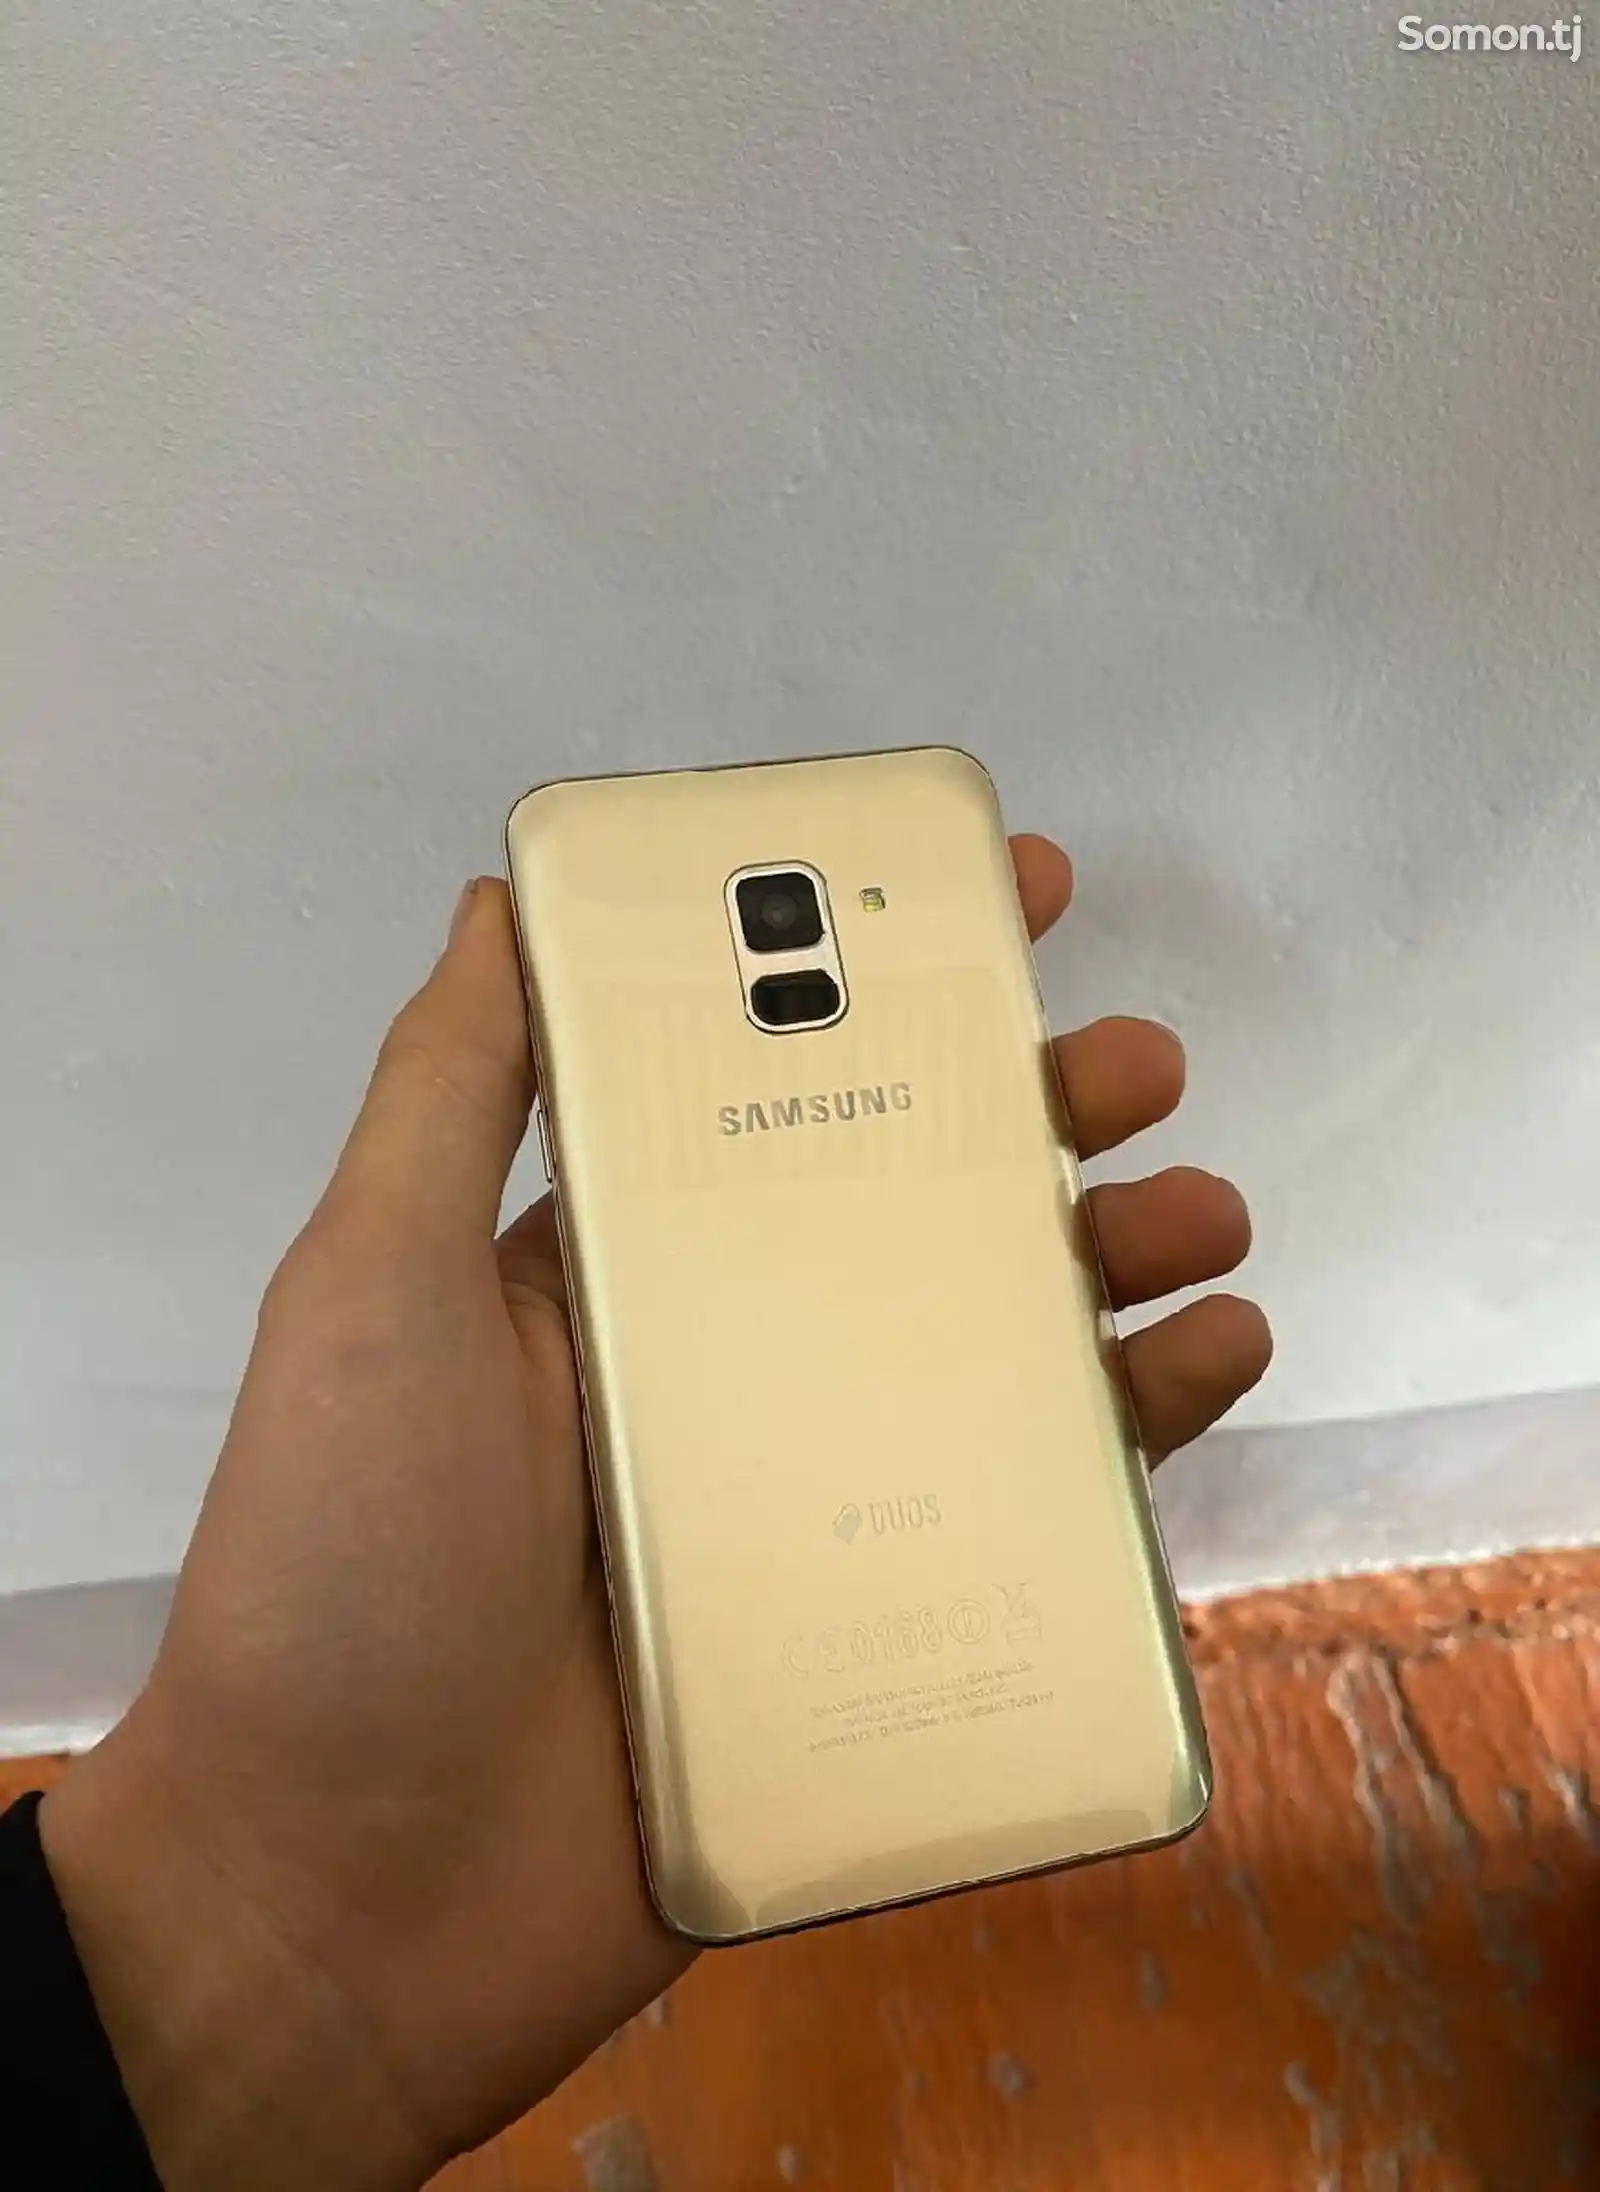 Samsung Galaxy A8 Dubai 2 Sim-1